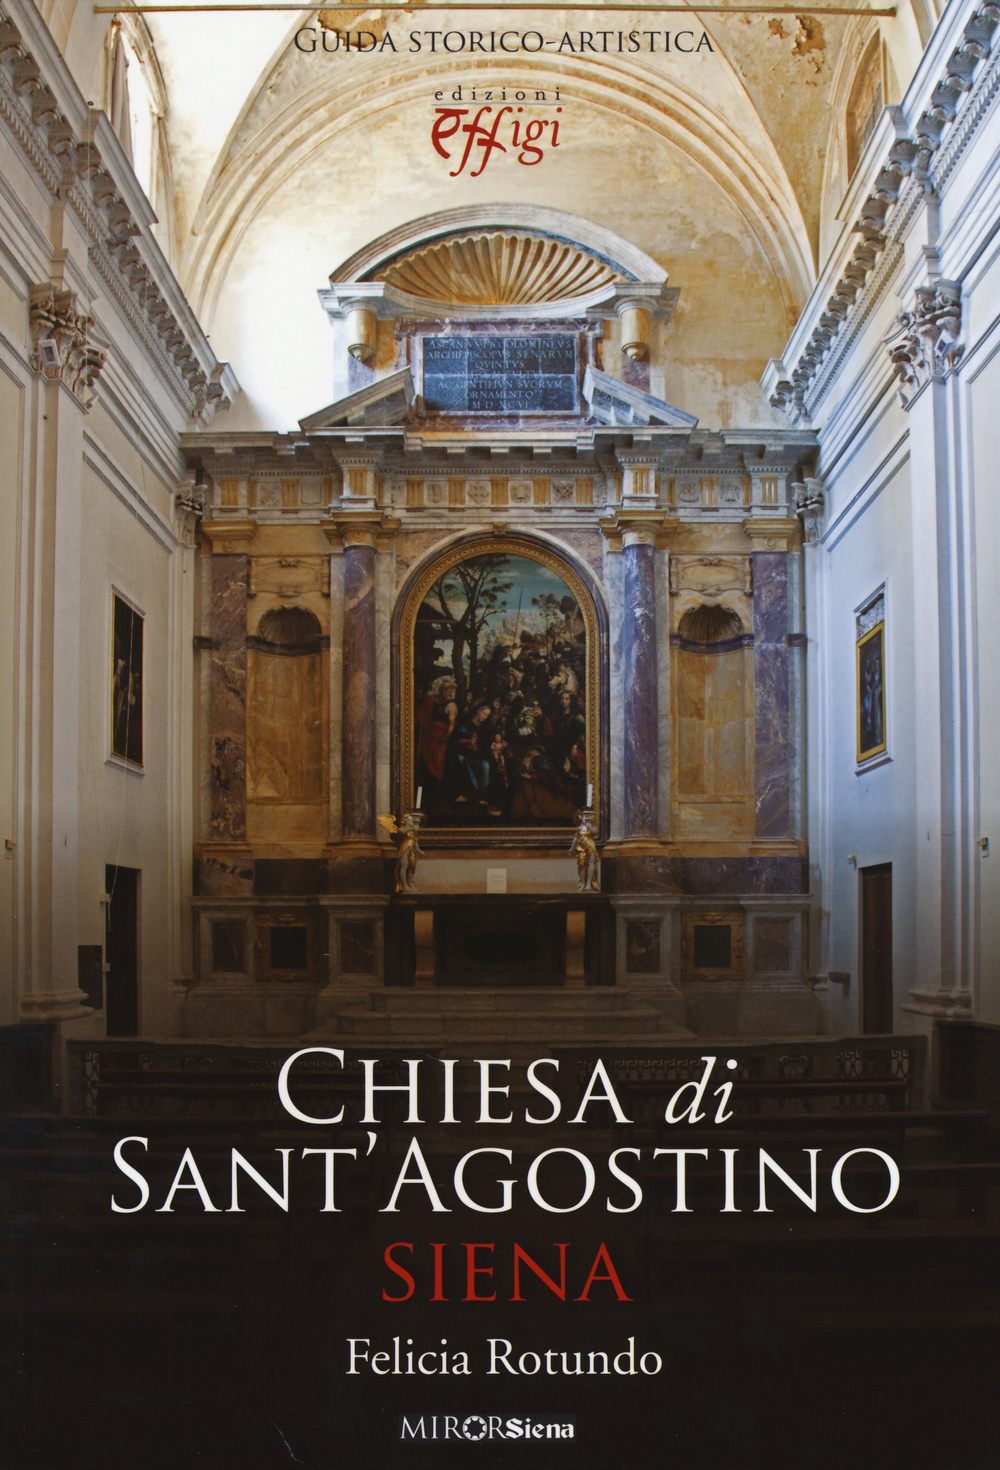 Chiesa di sant'Agostino Siena